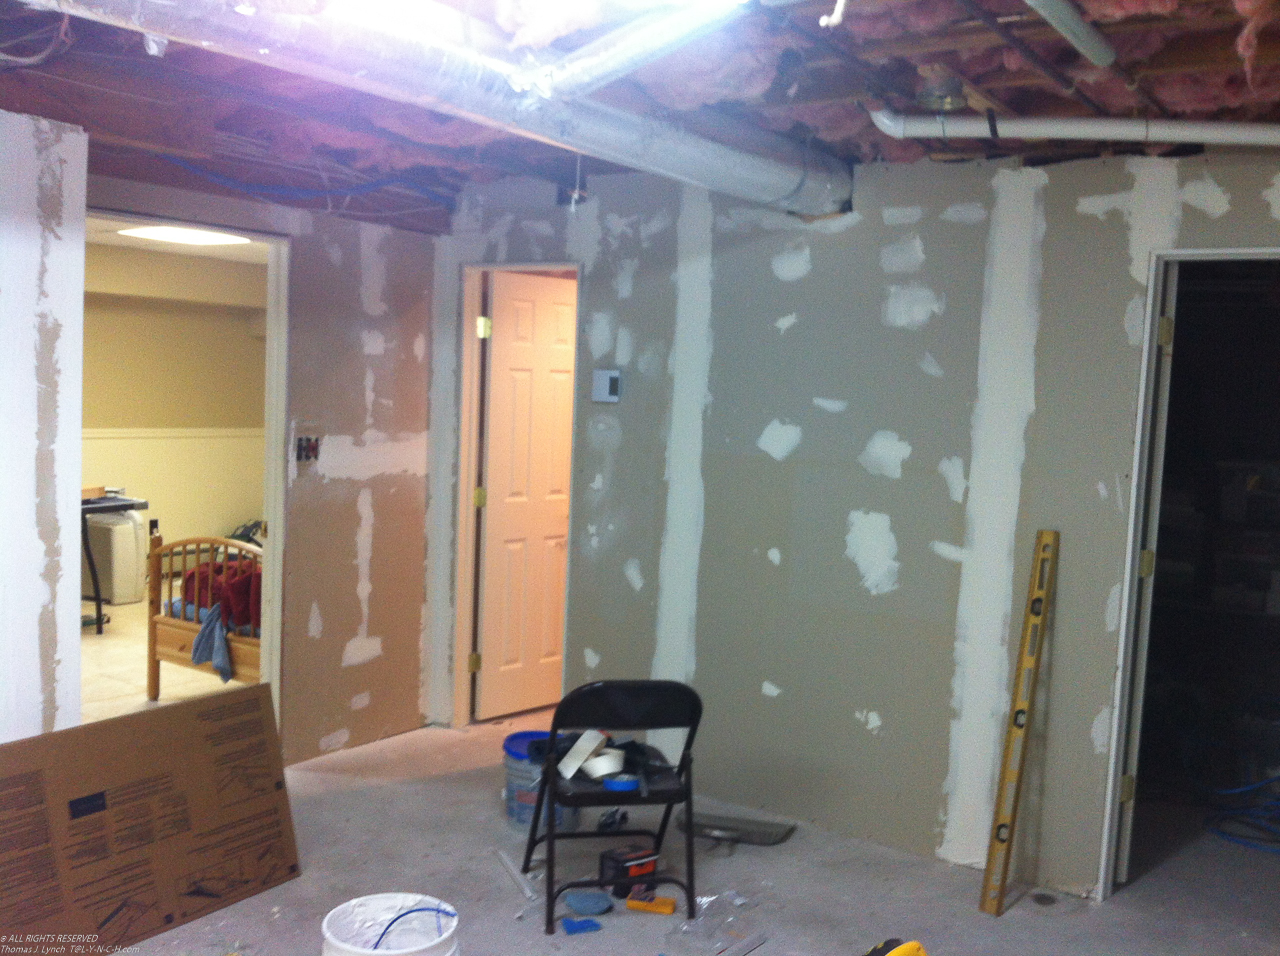 Dan's Room under construction  ~~  